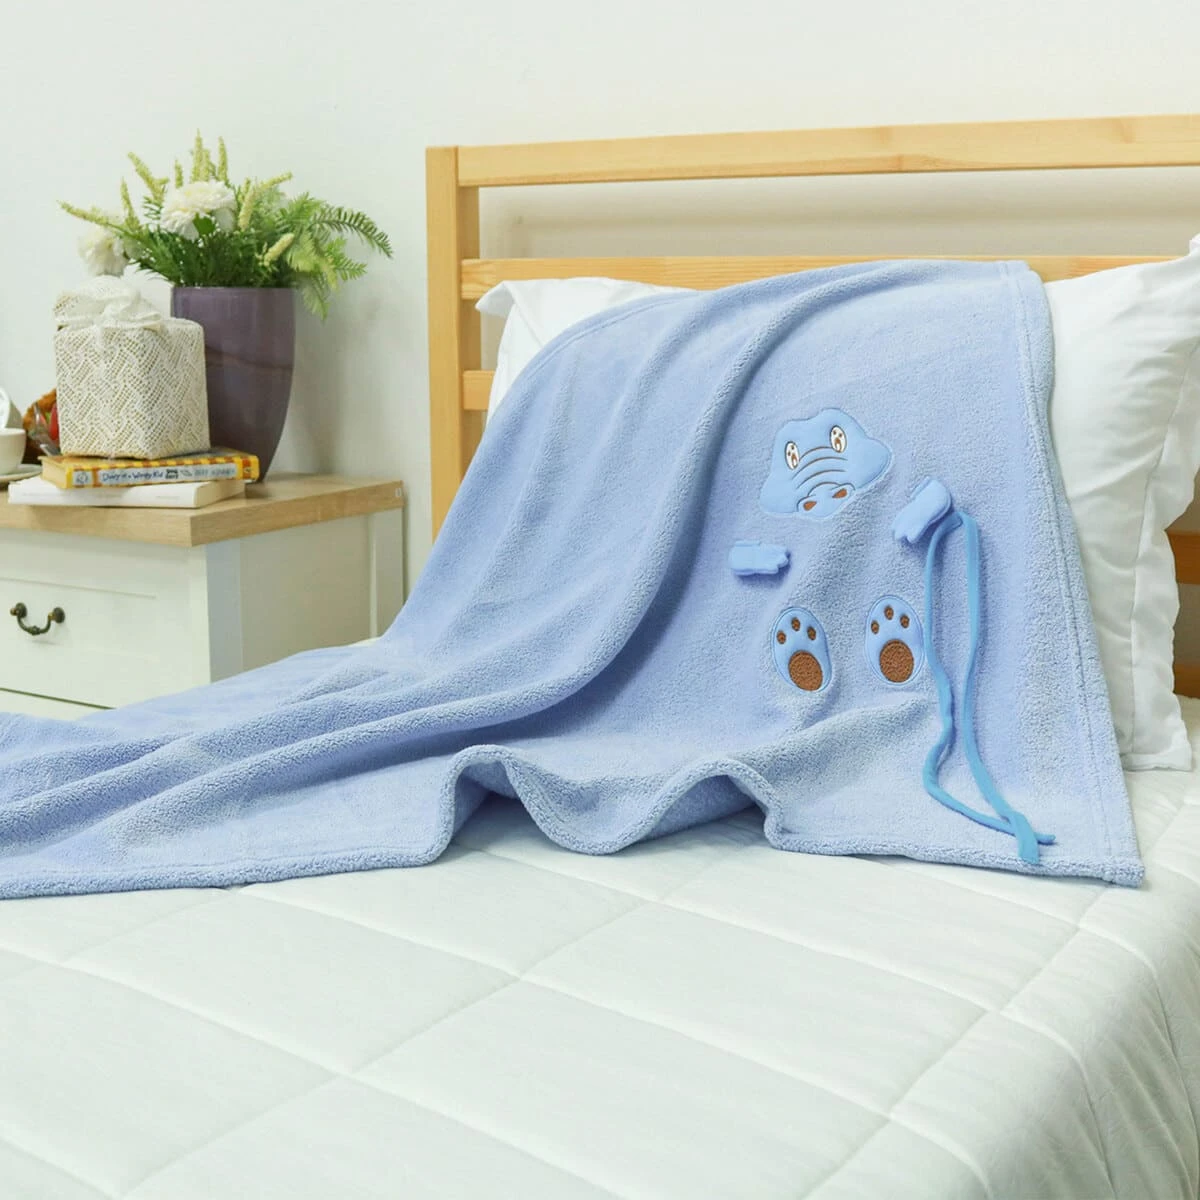 3D Crocodile Embroidery Plush Baby Blanket (Blue)